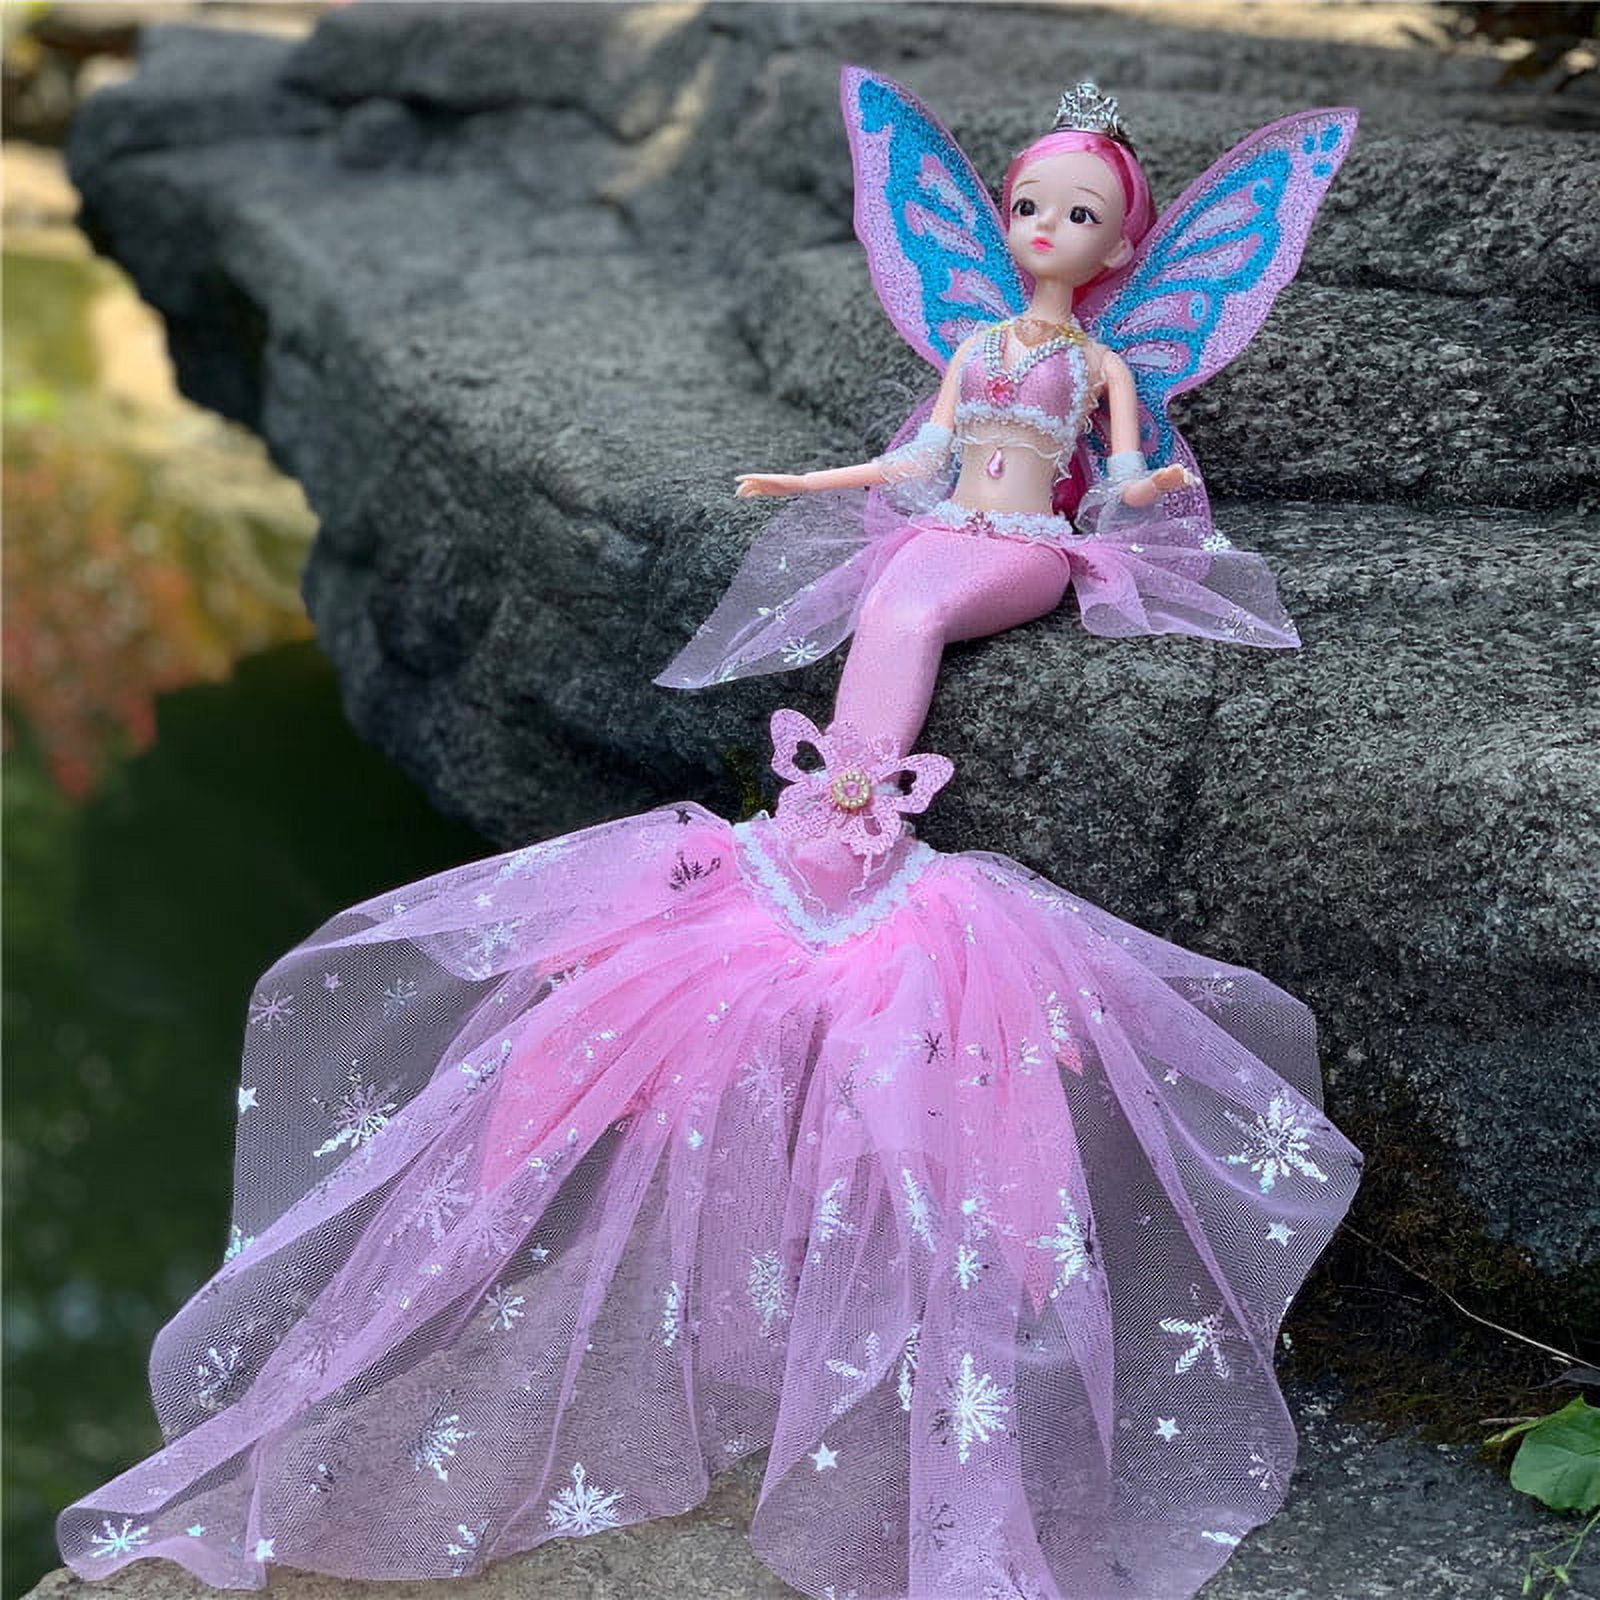 45cm Wedding Mermaid Doll Toys Decoration DIY Birthday Gifts for  Girls(White)